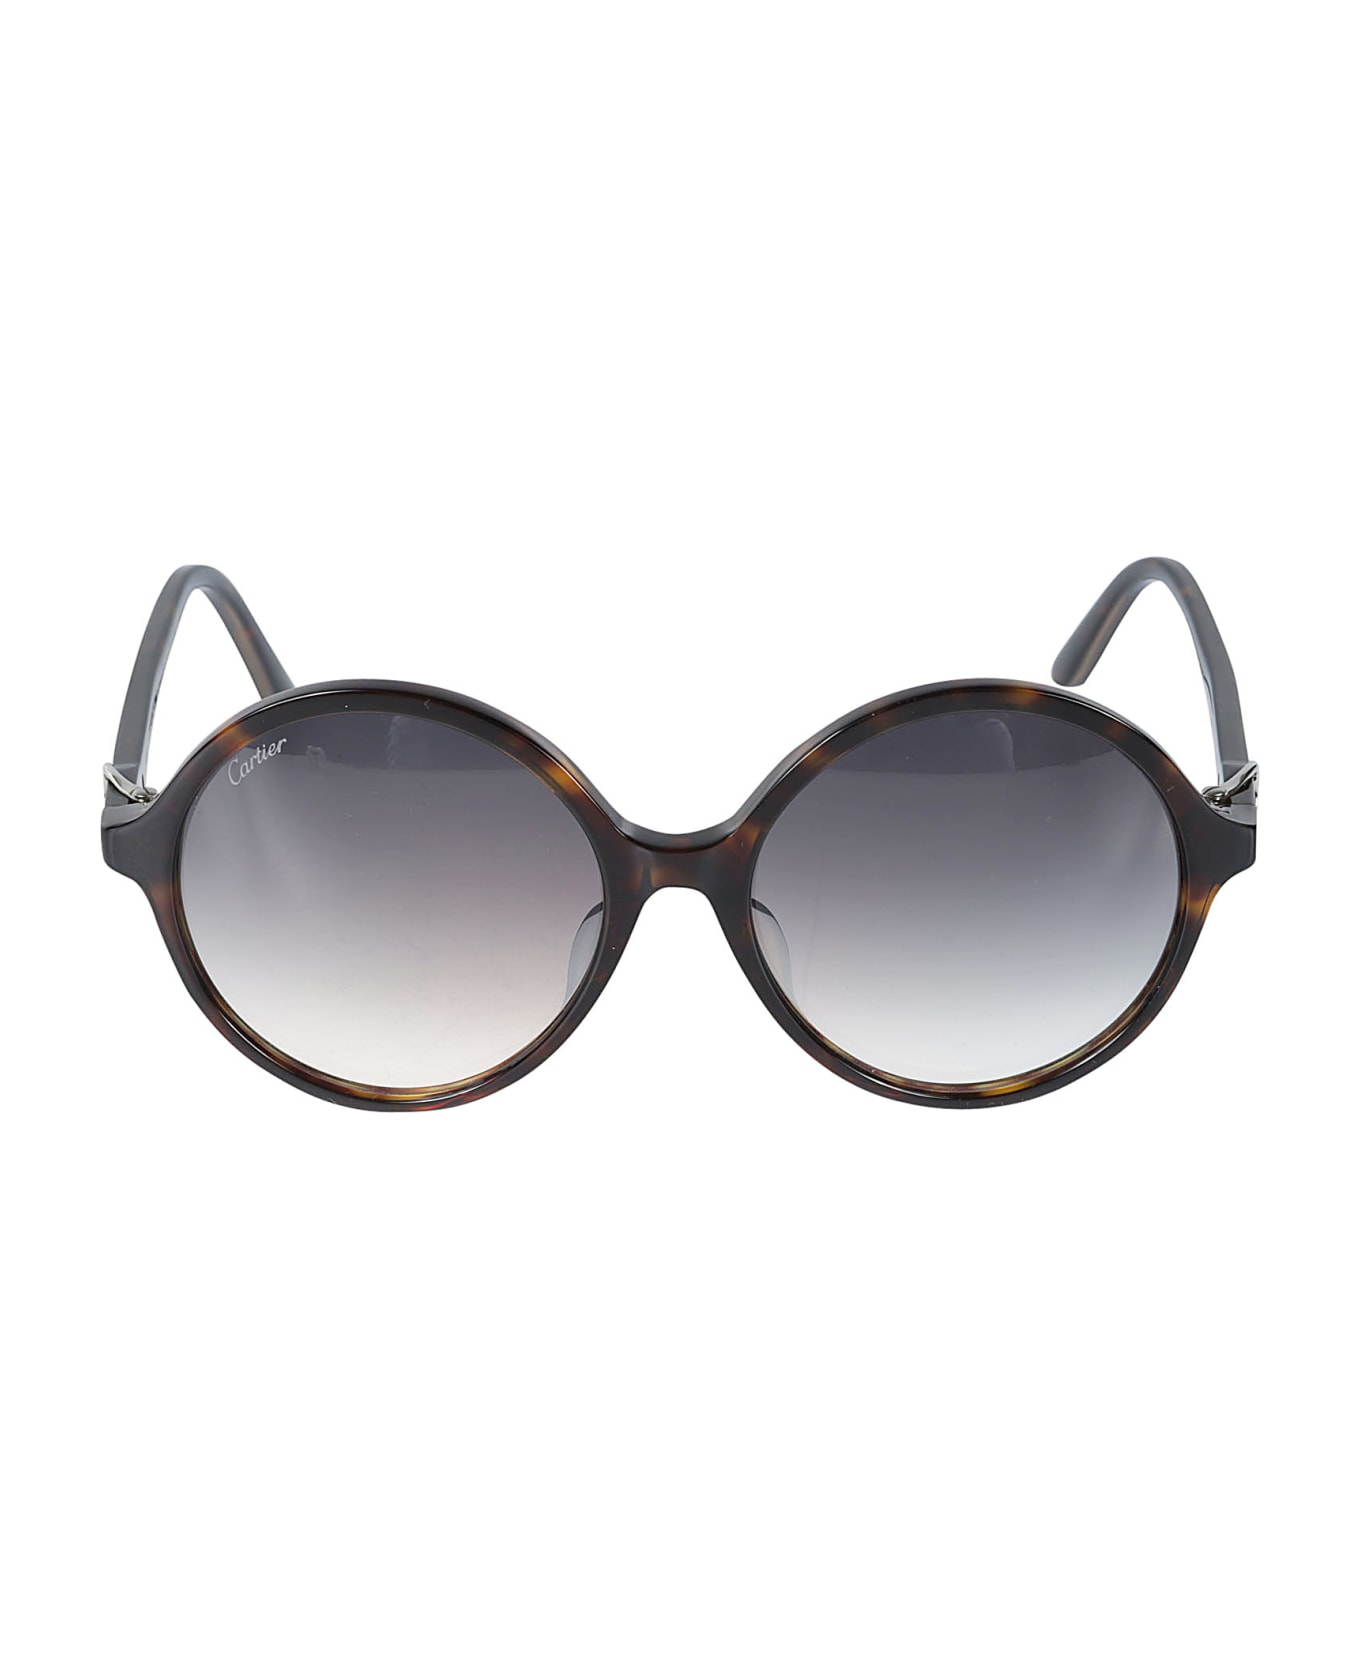 Cartier Eyewear Round Frame Sunglasses - Brown/Grey サングラス